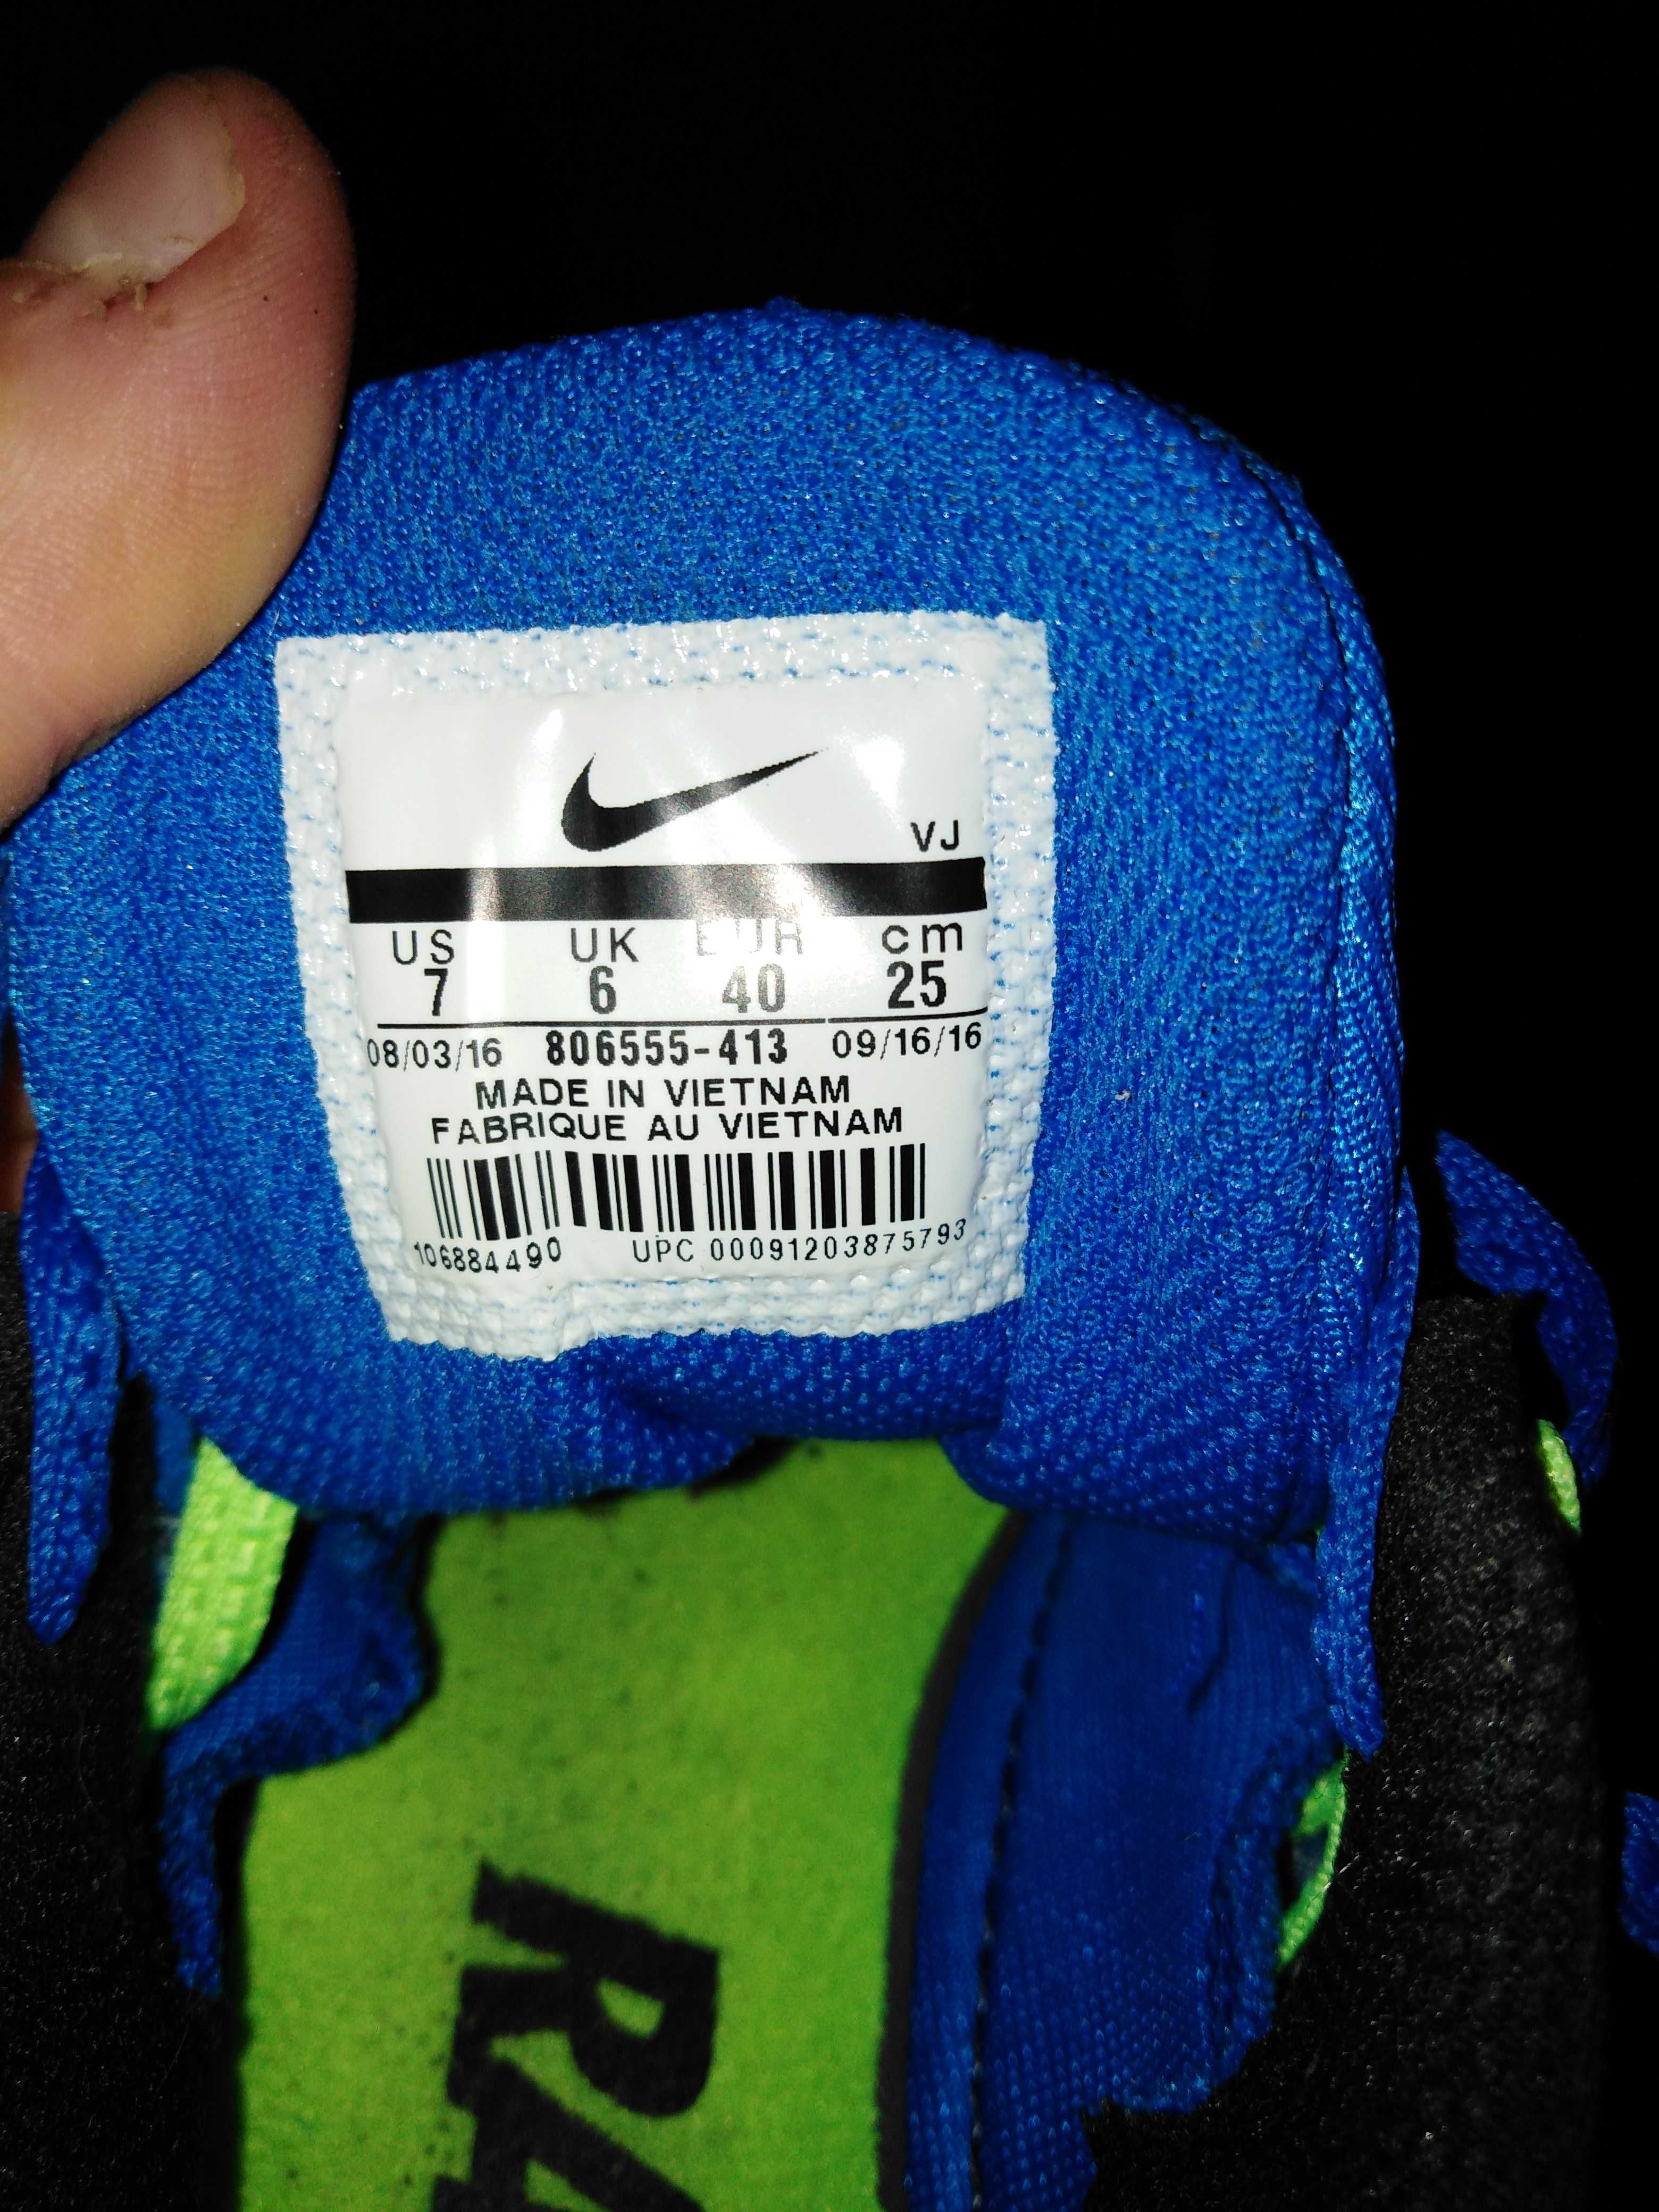 Kolce, korki, buty do biegania Nike rival m rozmiar 40